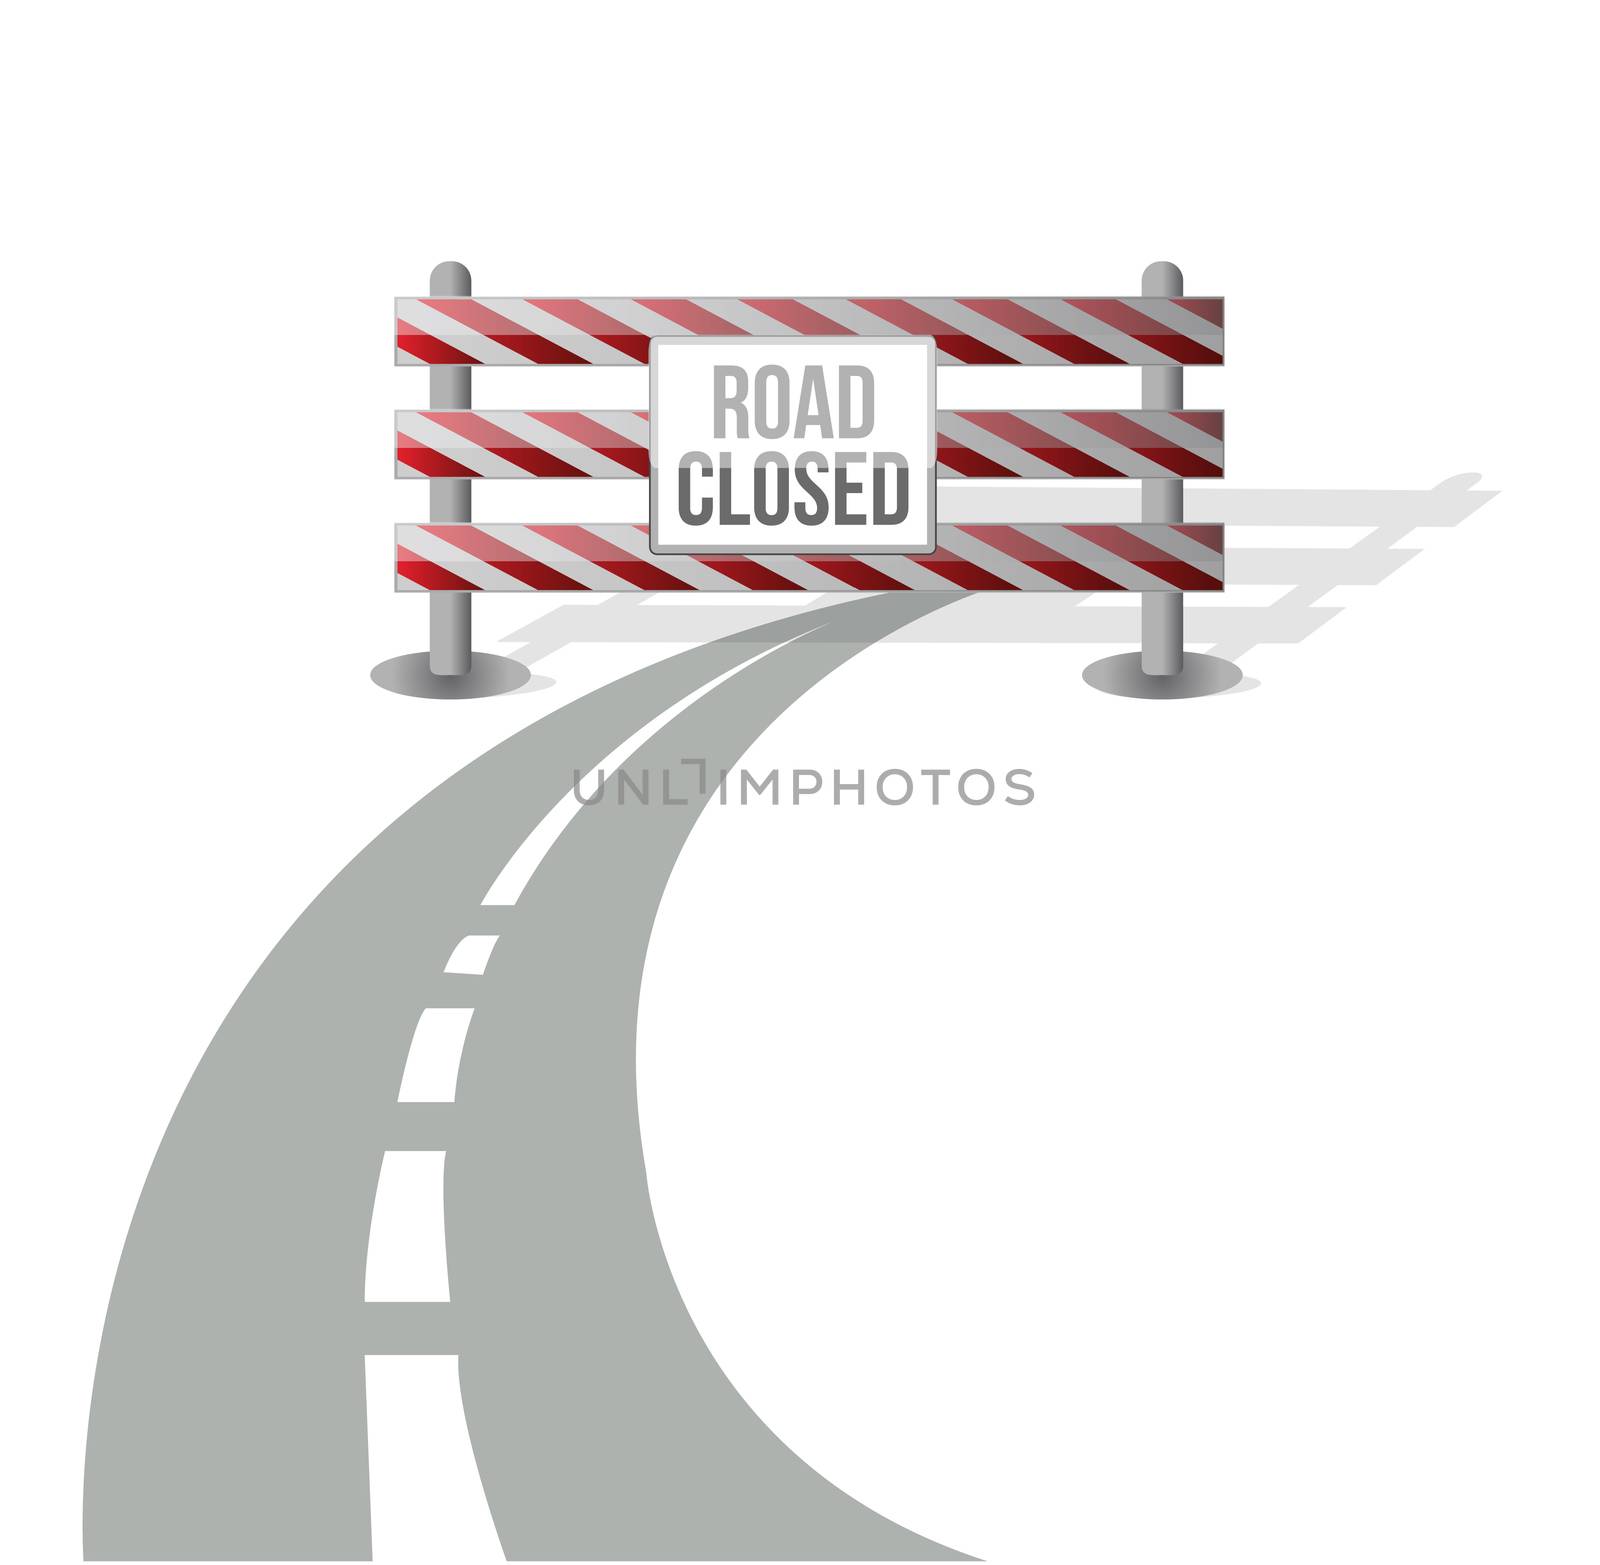 Closed road illustration design over white background